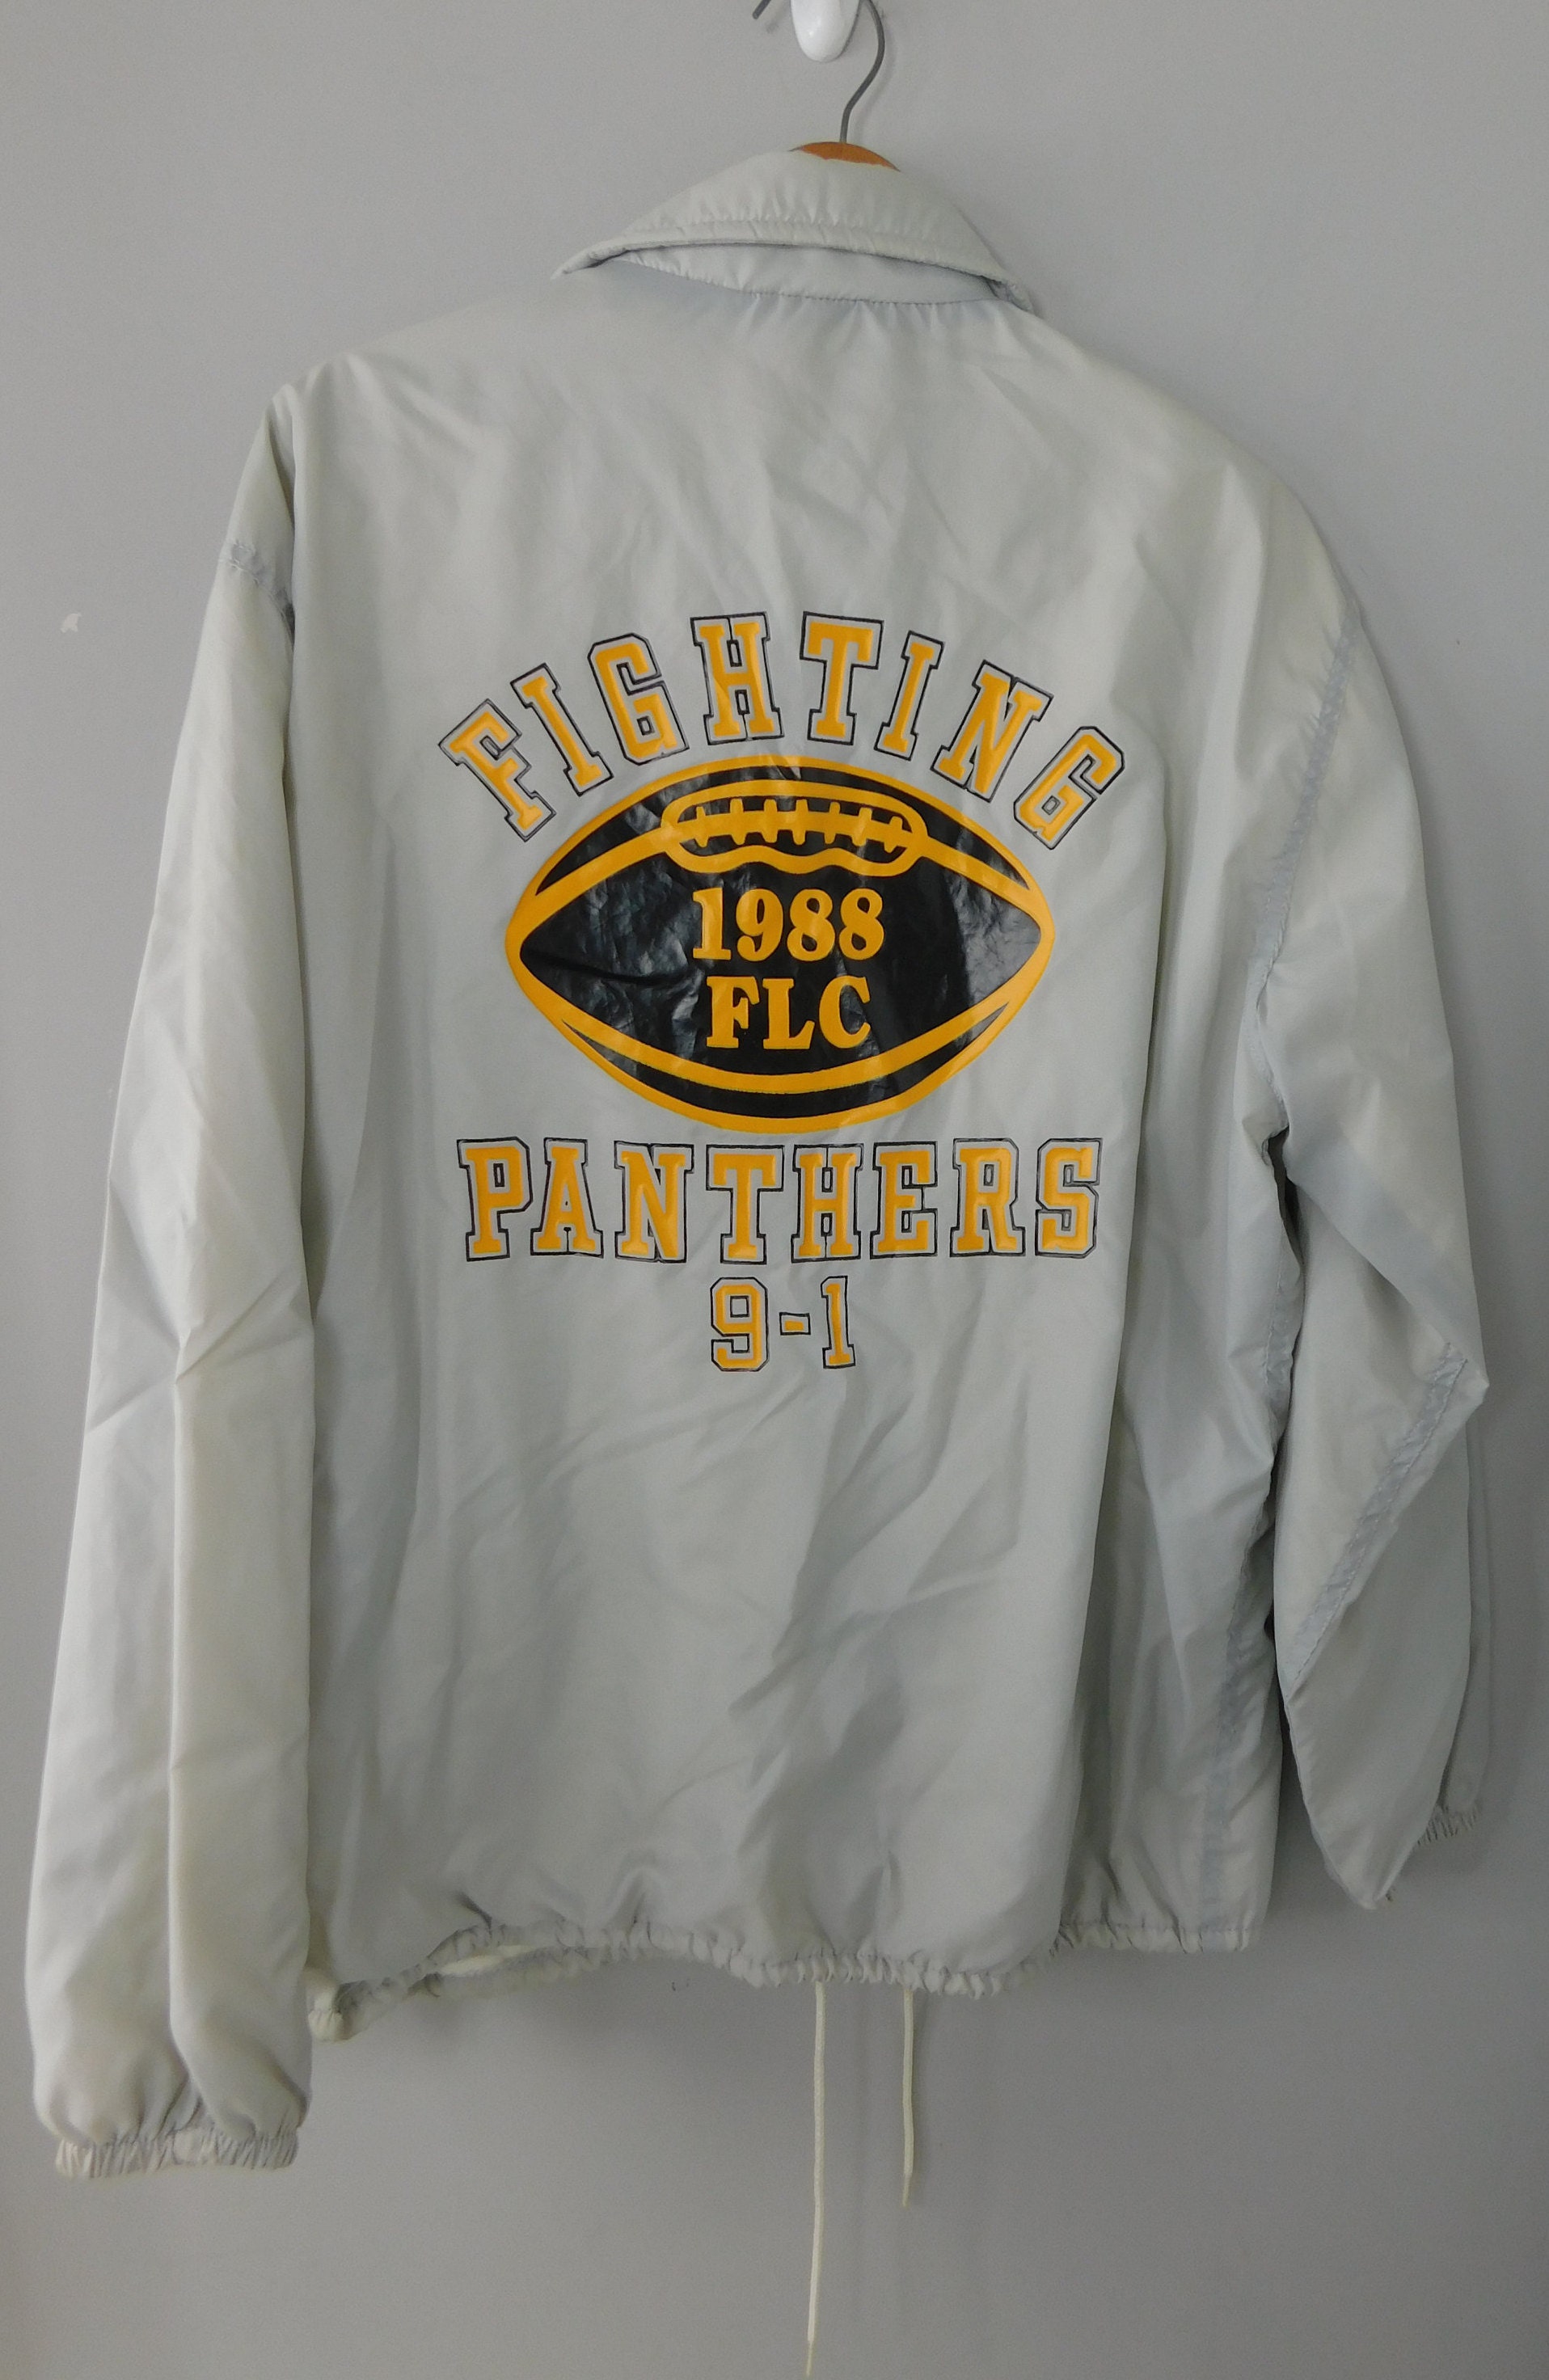 1988 Vintage School Football Jacket Fighting Panthers FLC 9-1 - Etsy